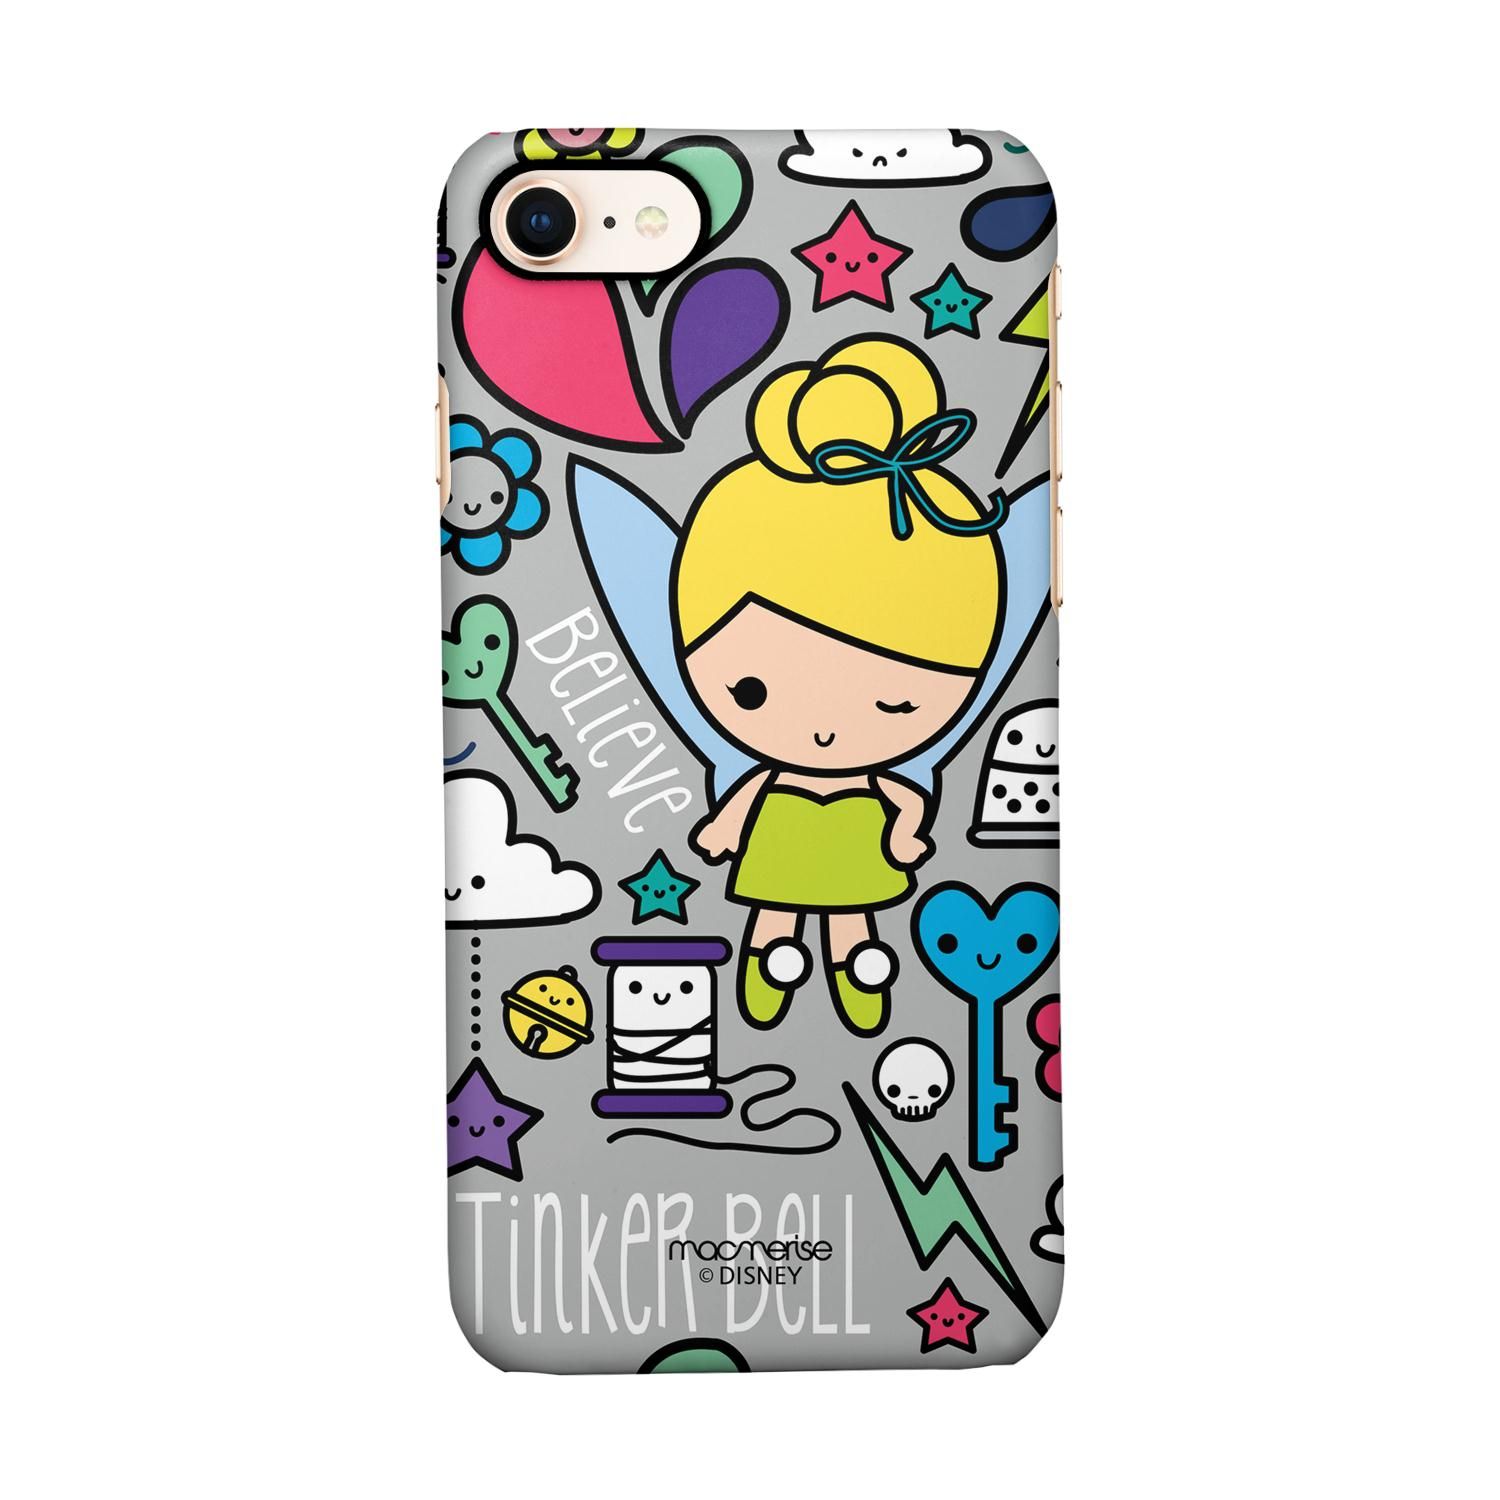 Buy Tinker World - Sleek Phone Case for iPhone 7 Online